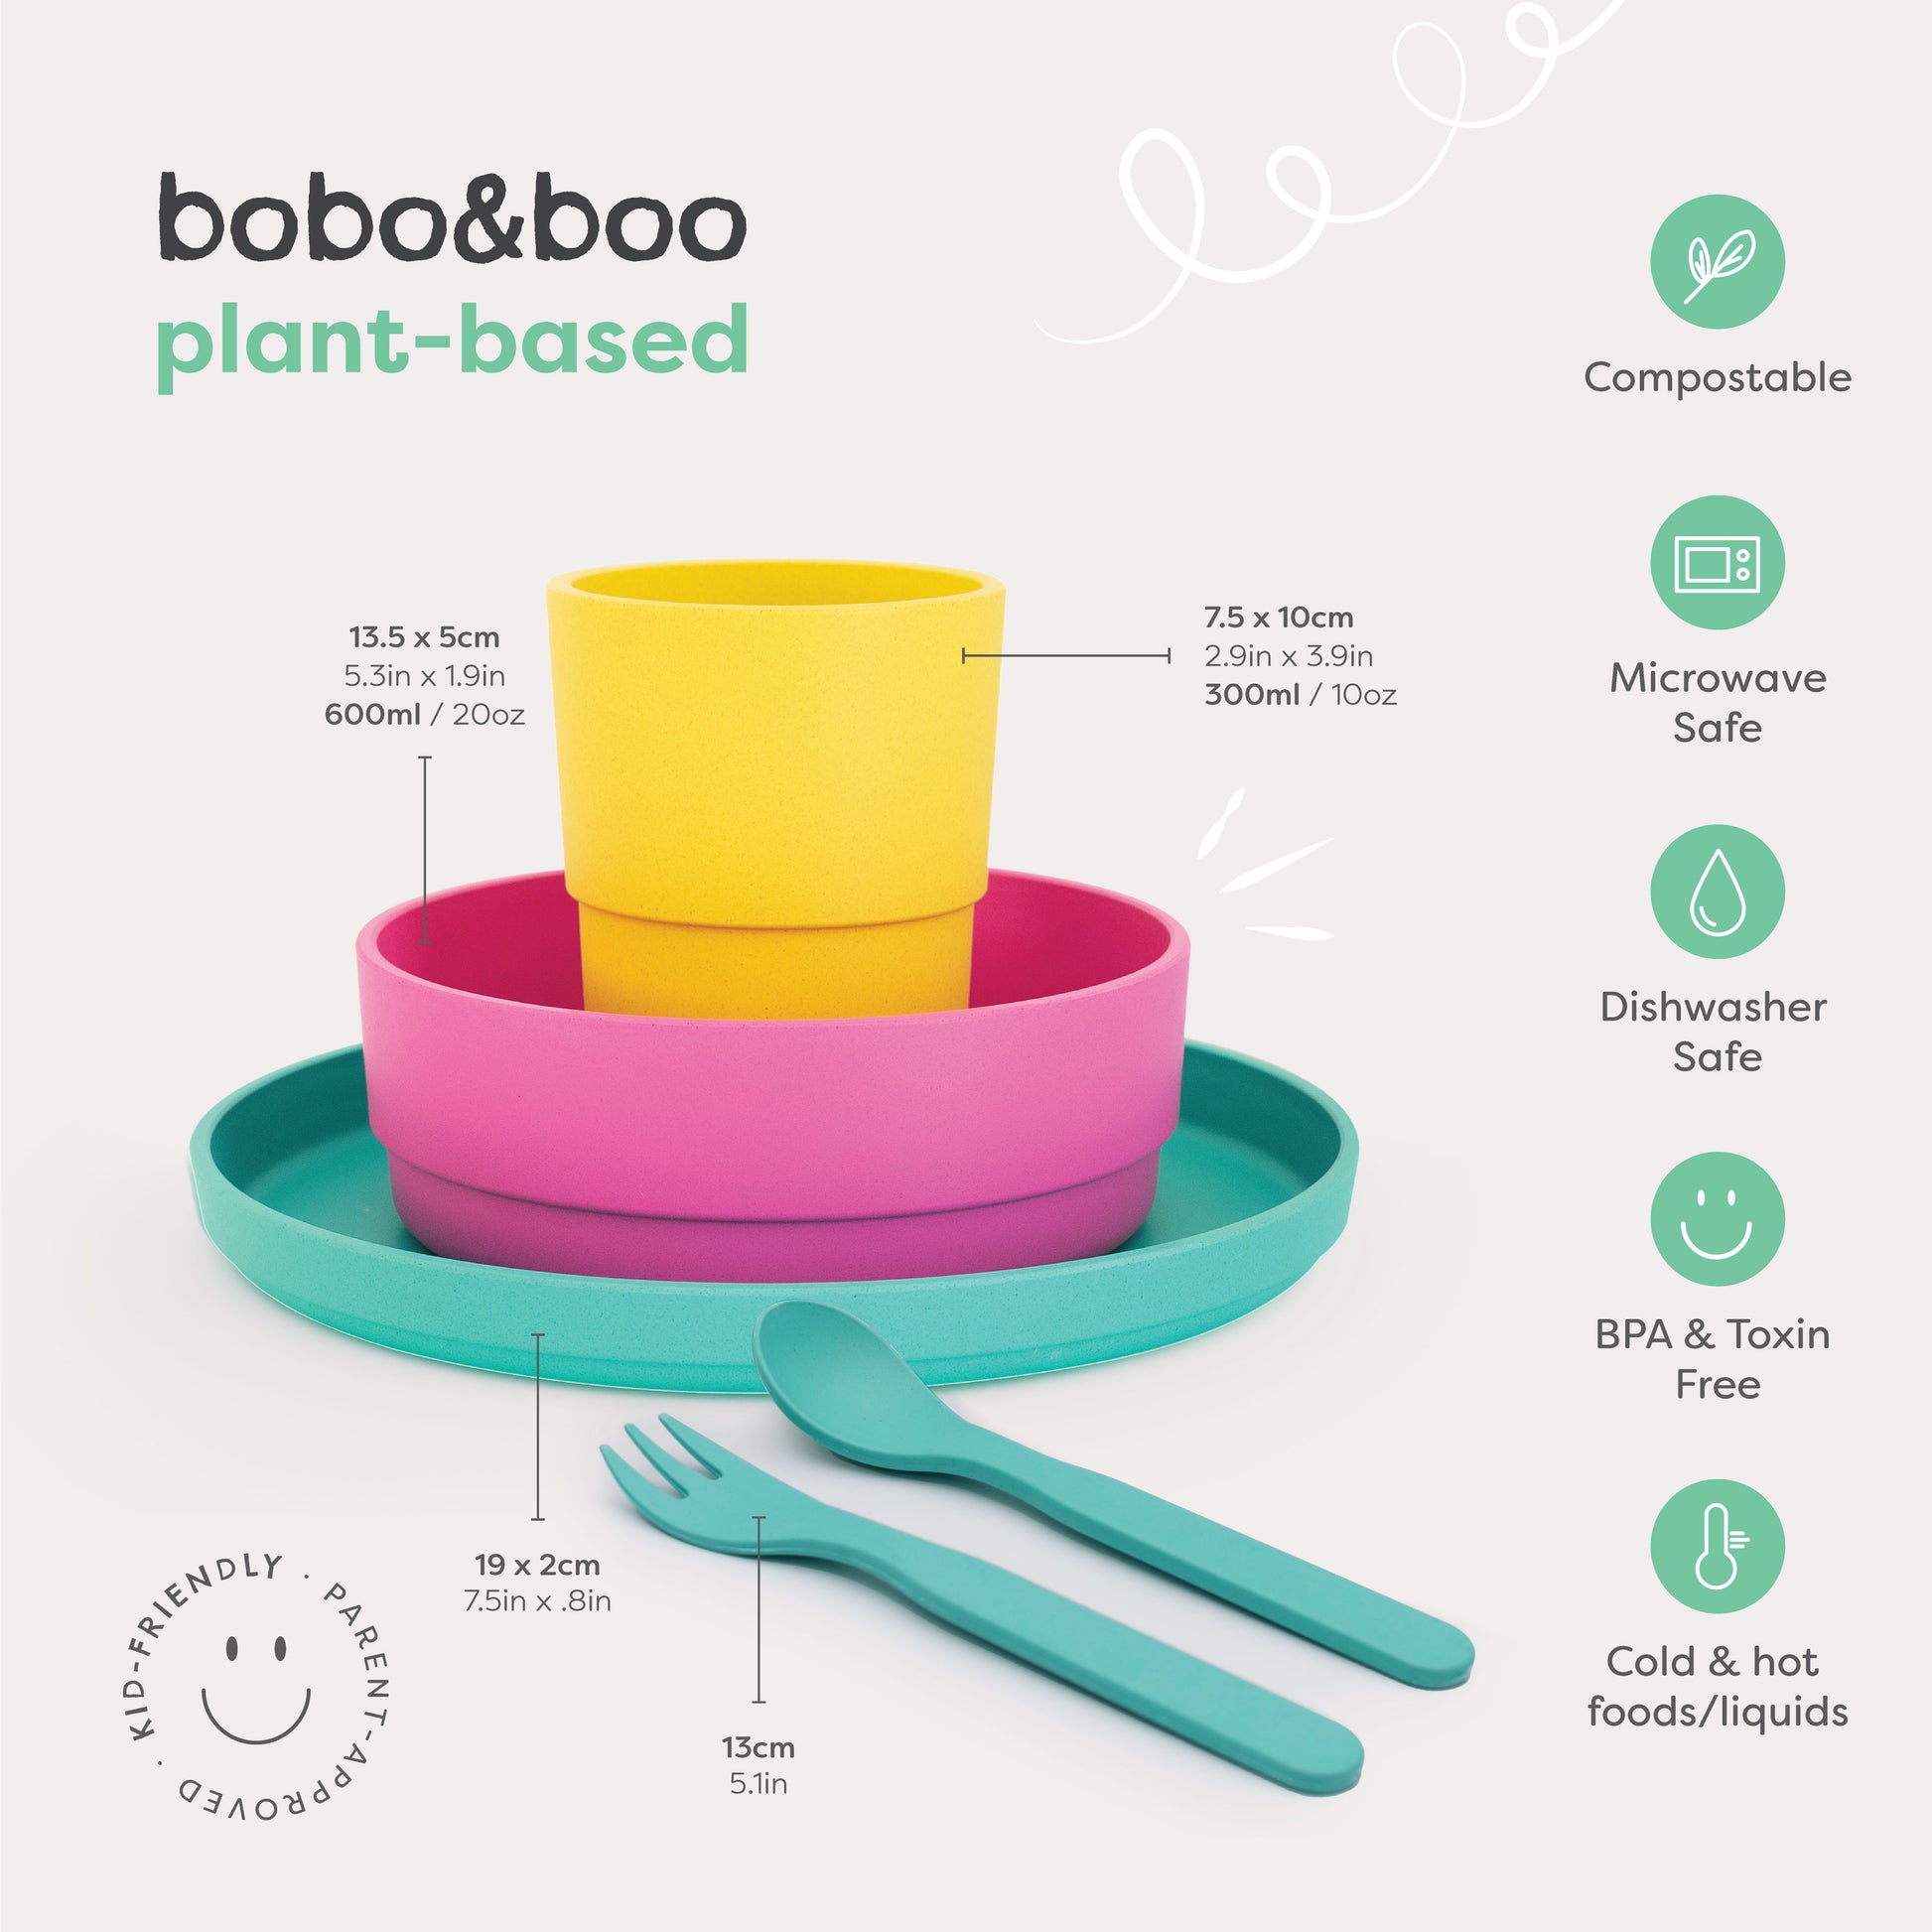 bobo & boo planted based range measurements